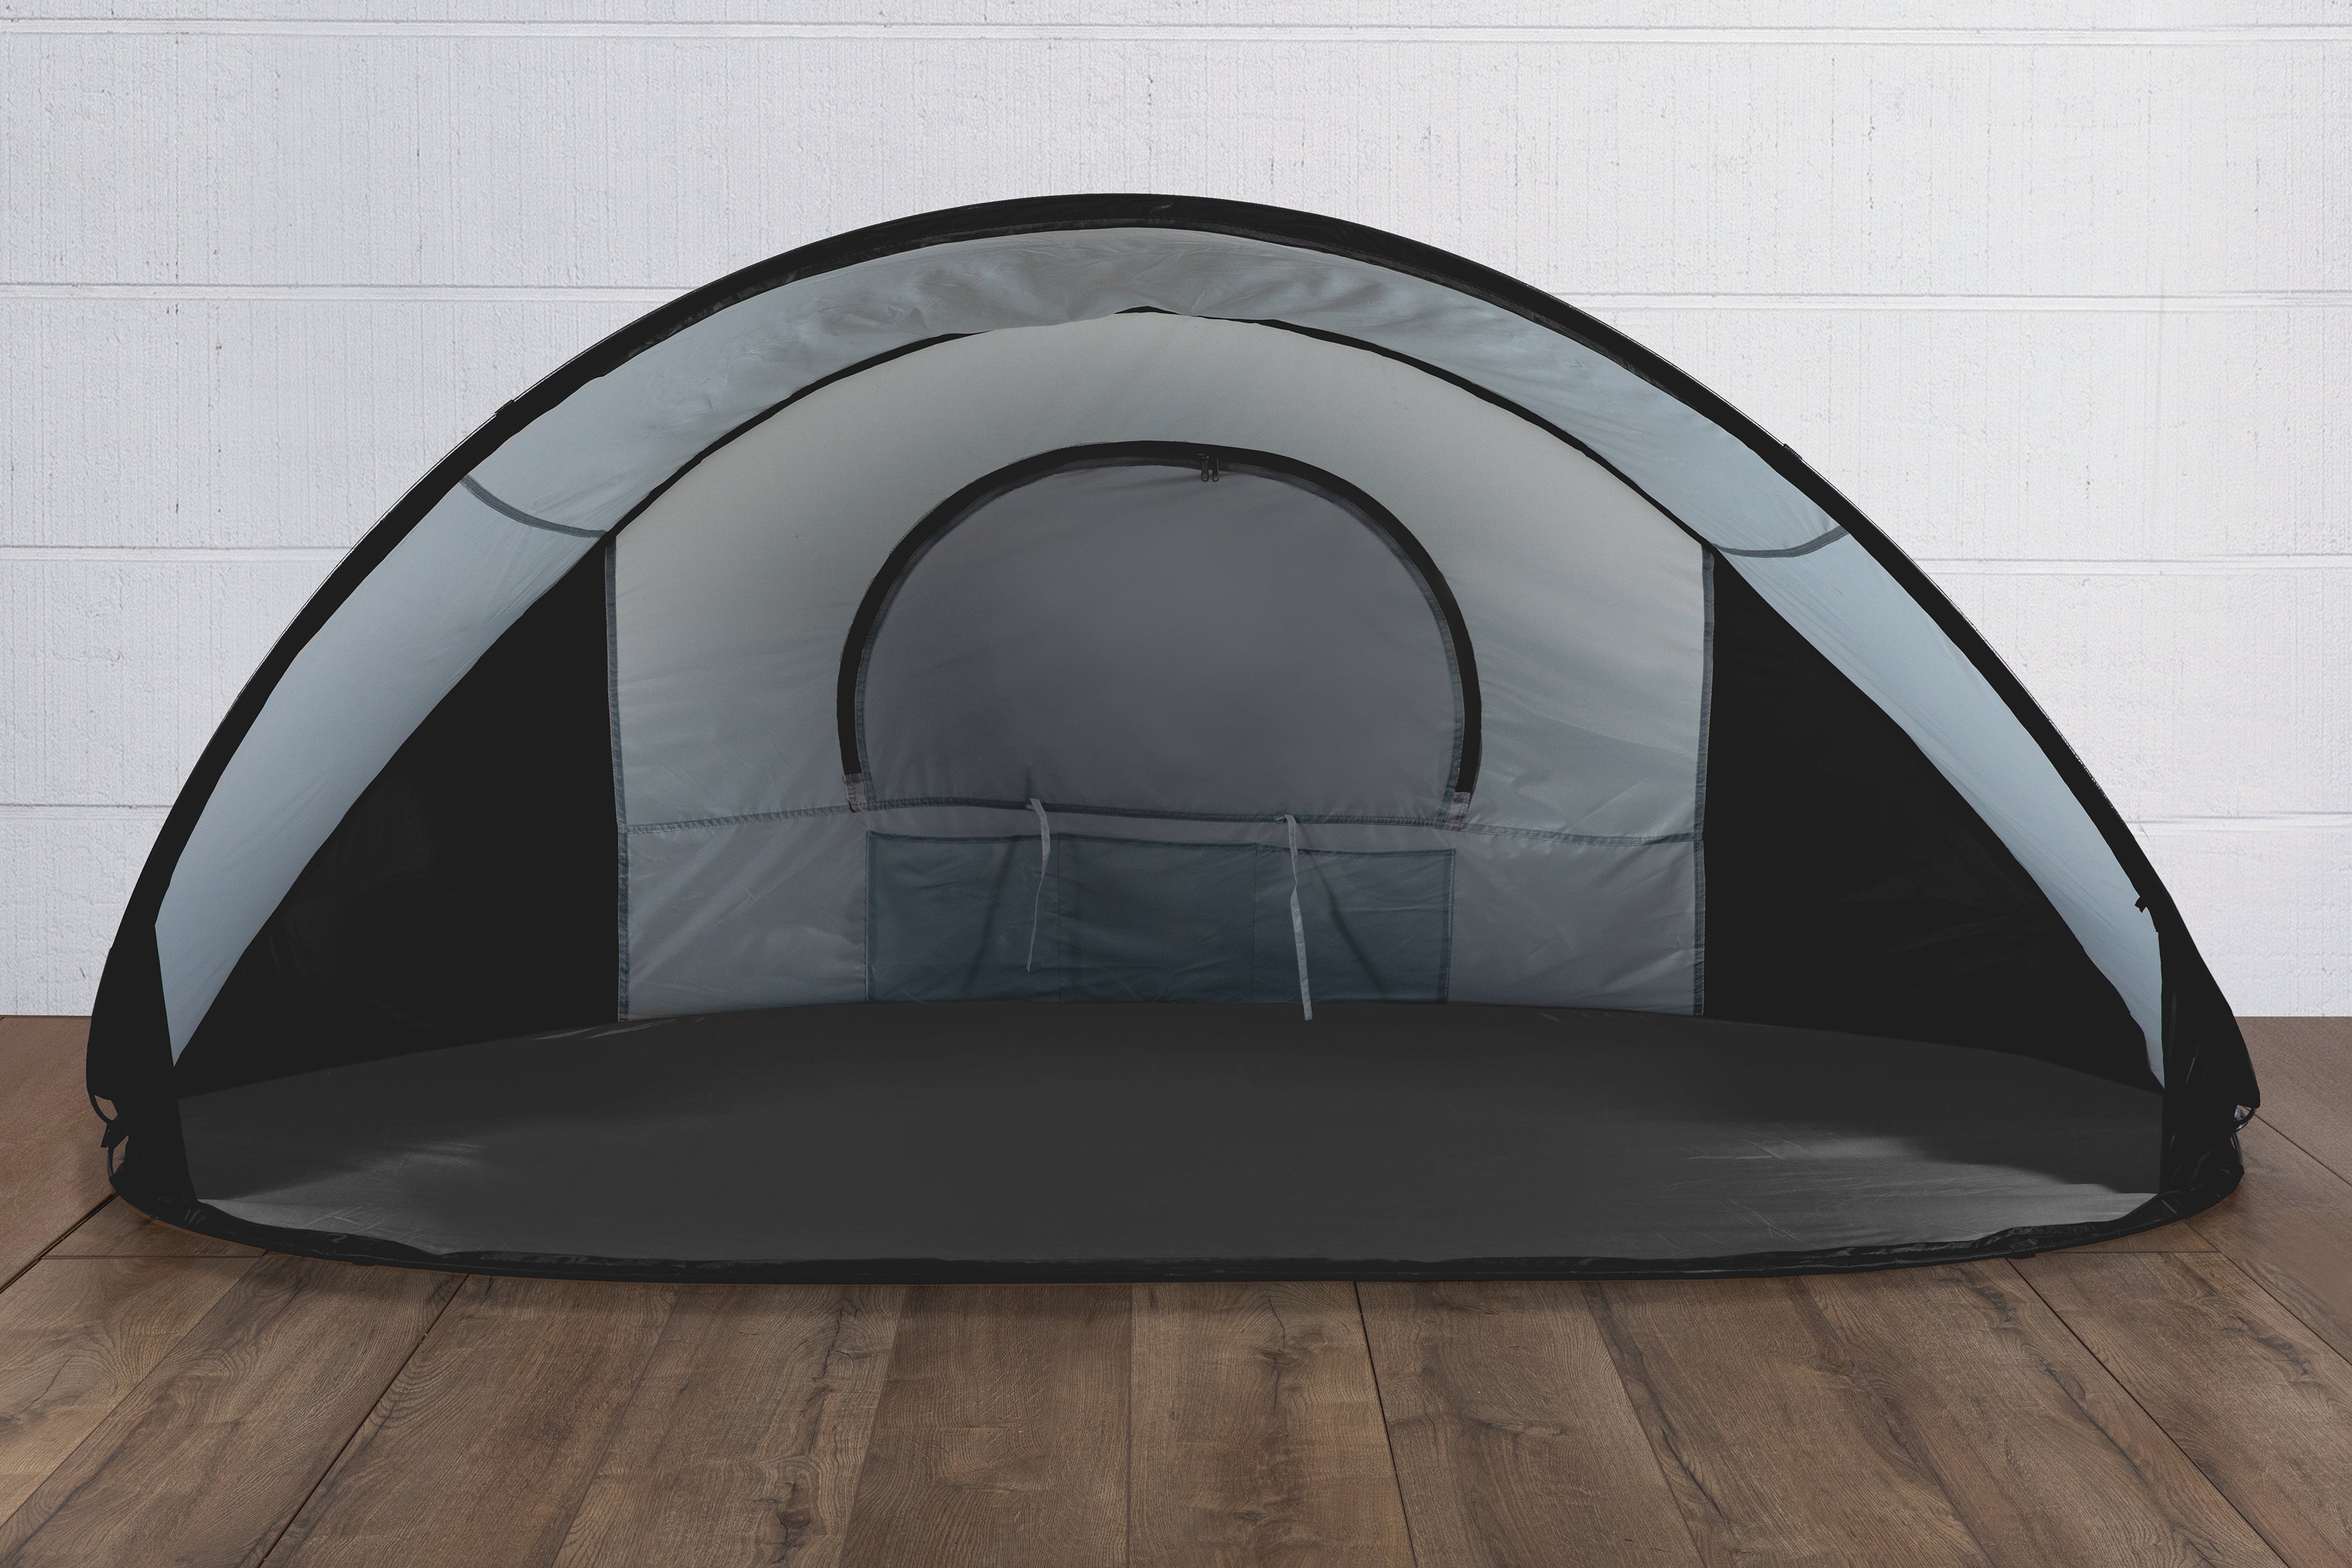 Baylor Bears - Manta Portable Beach Tent